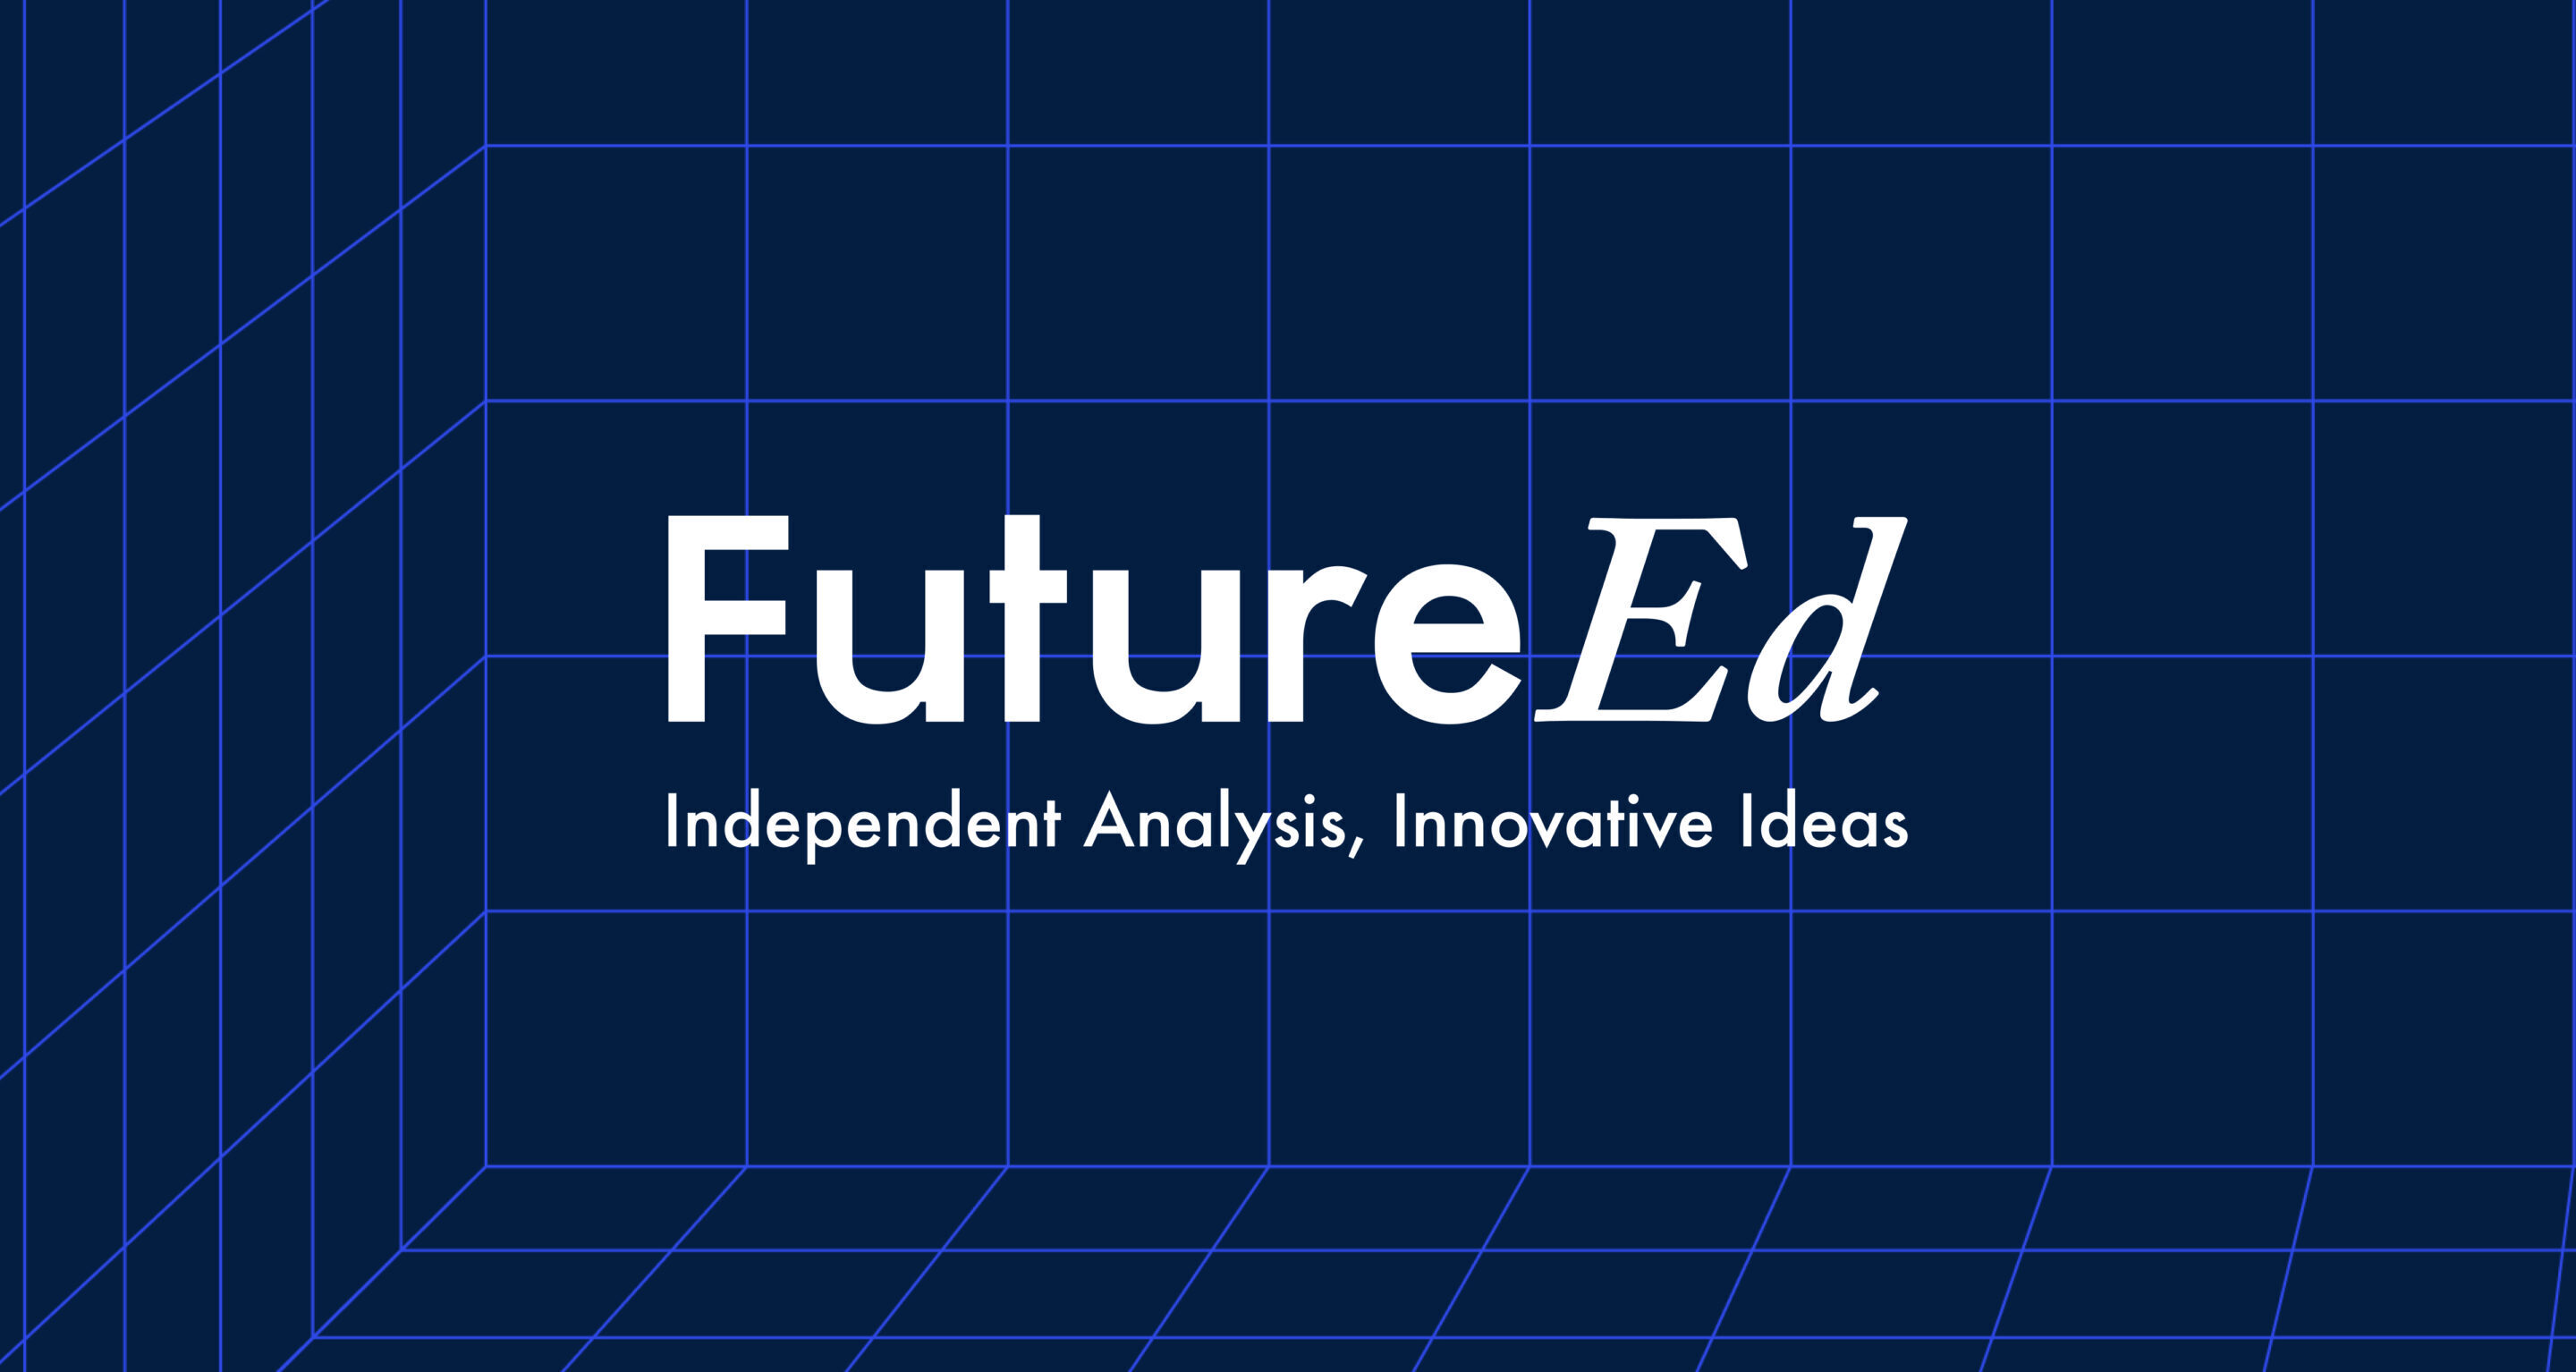 (c) Future-ed.org